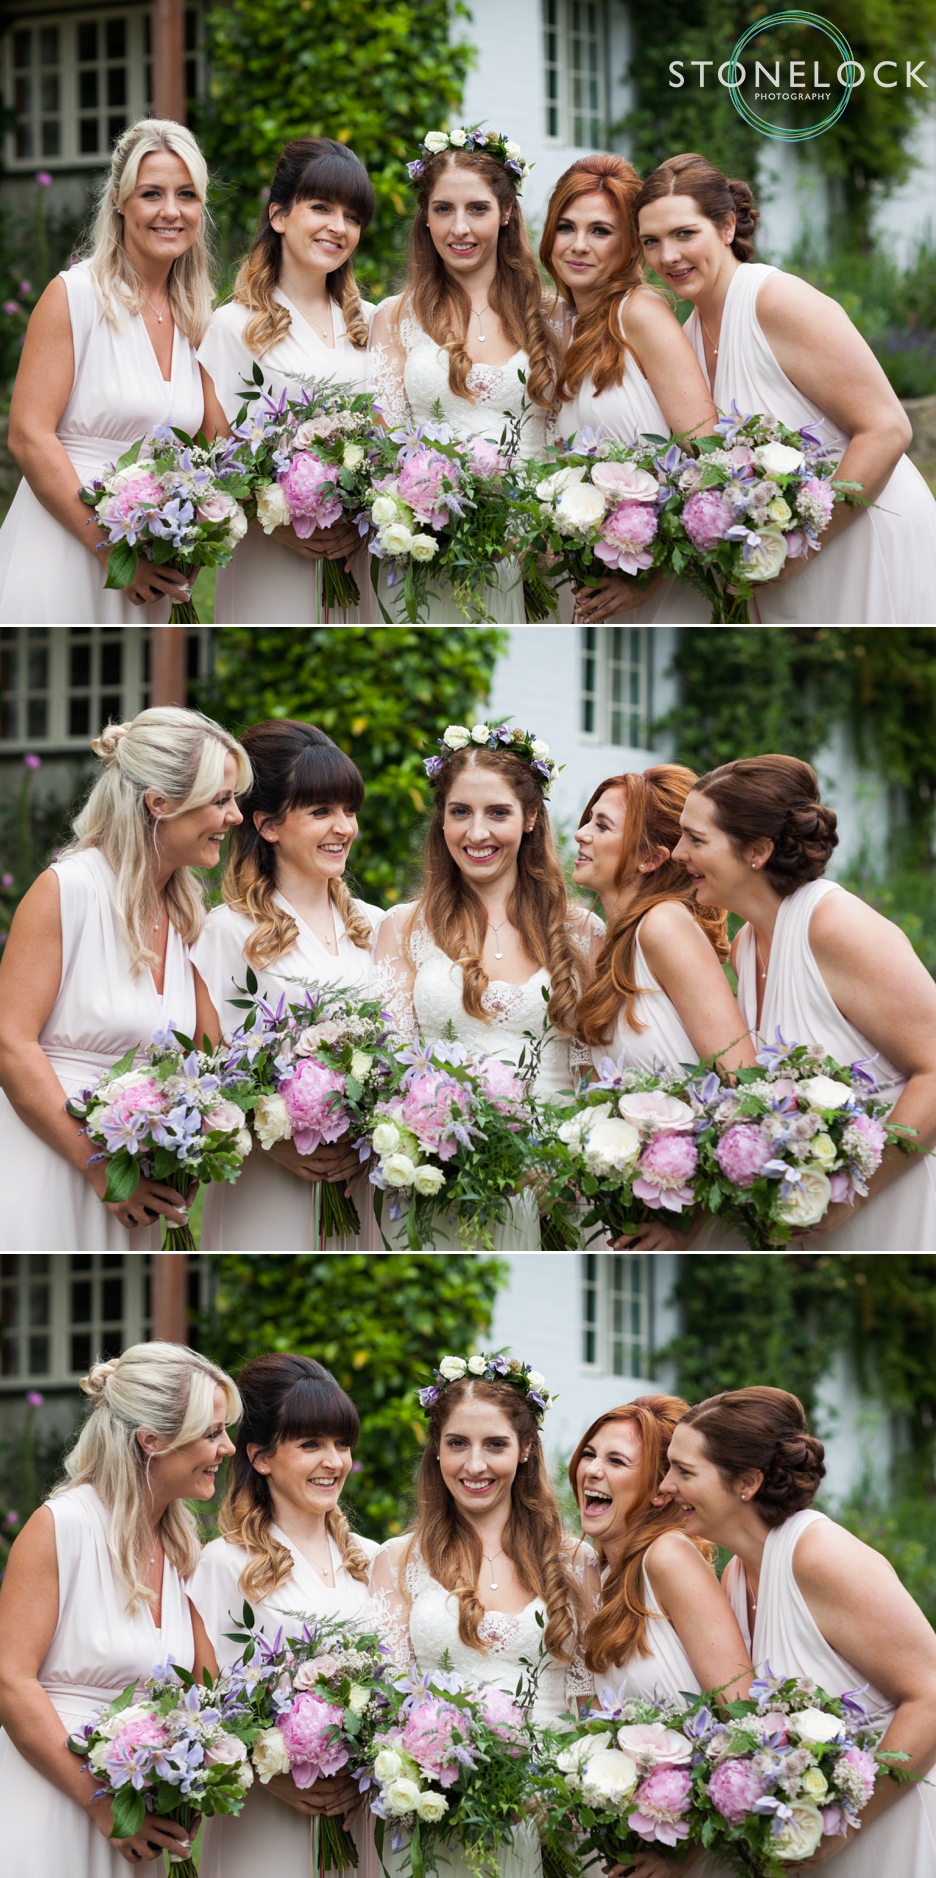 Wedding photography at Ridge Farm Studios, Dorking, Surrey. The bride & her bridesmaids.